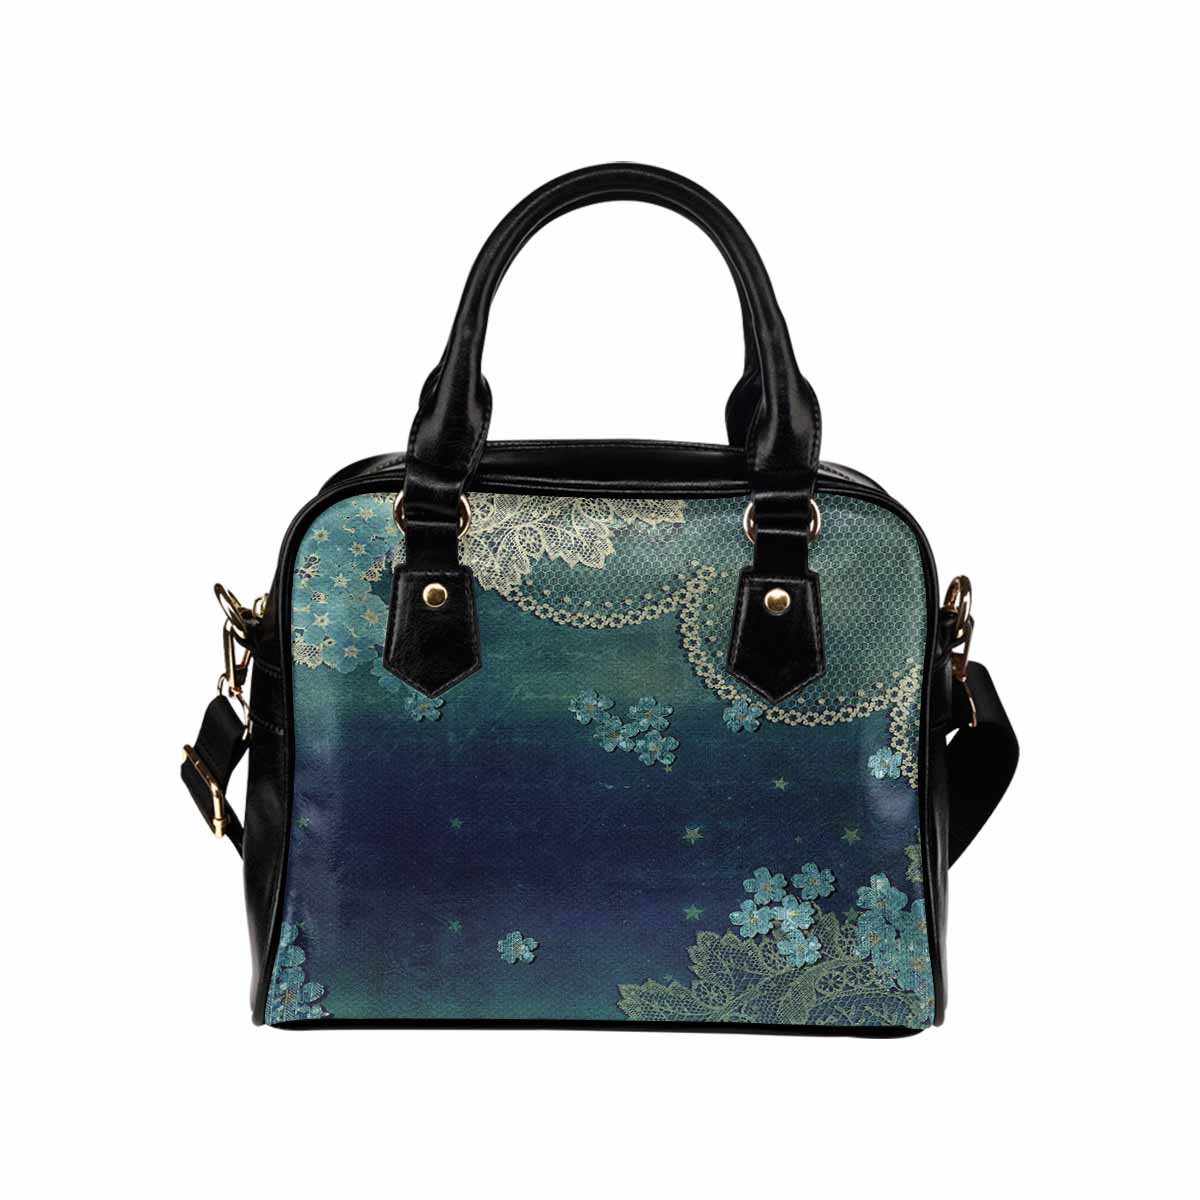 Victorian lace print, cute handbag, Mod 19163453, design 04